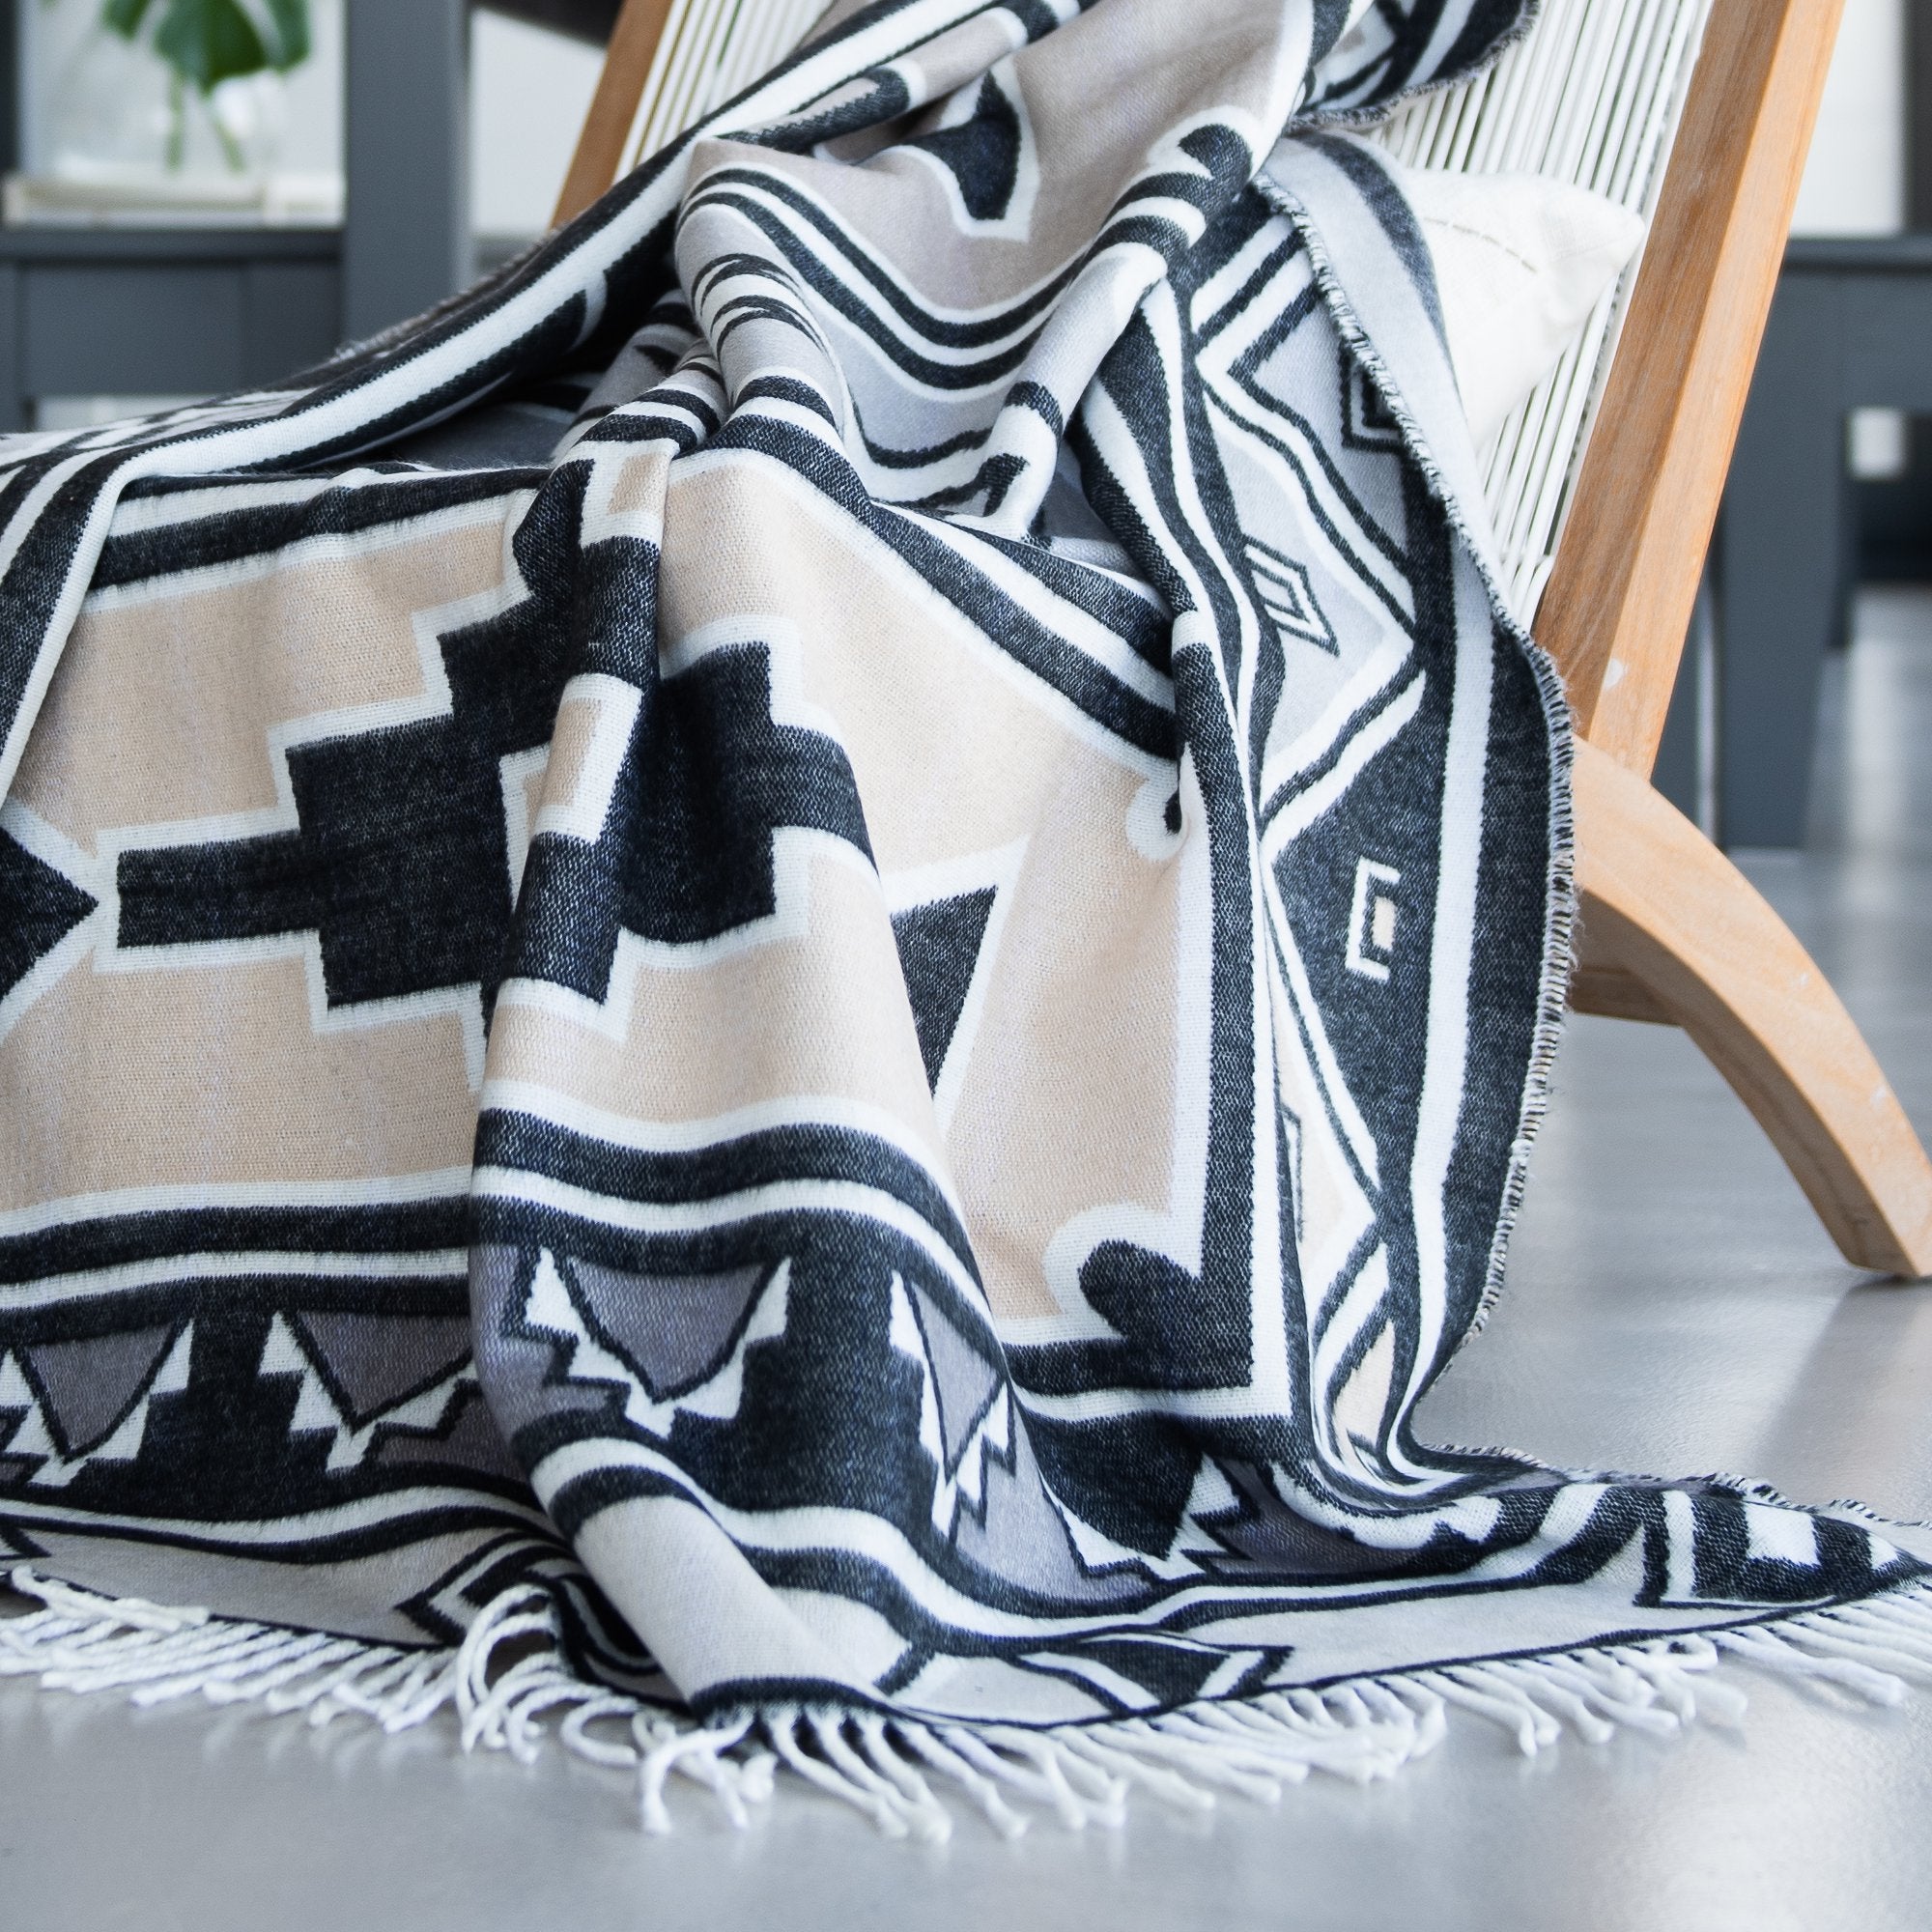 Cozy African blanket - Ndebele - 180 x 140 cm